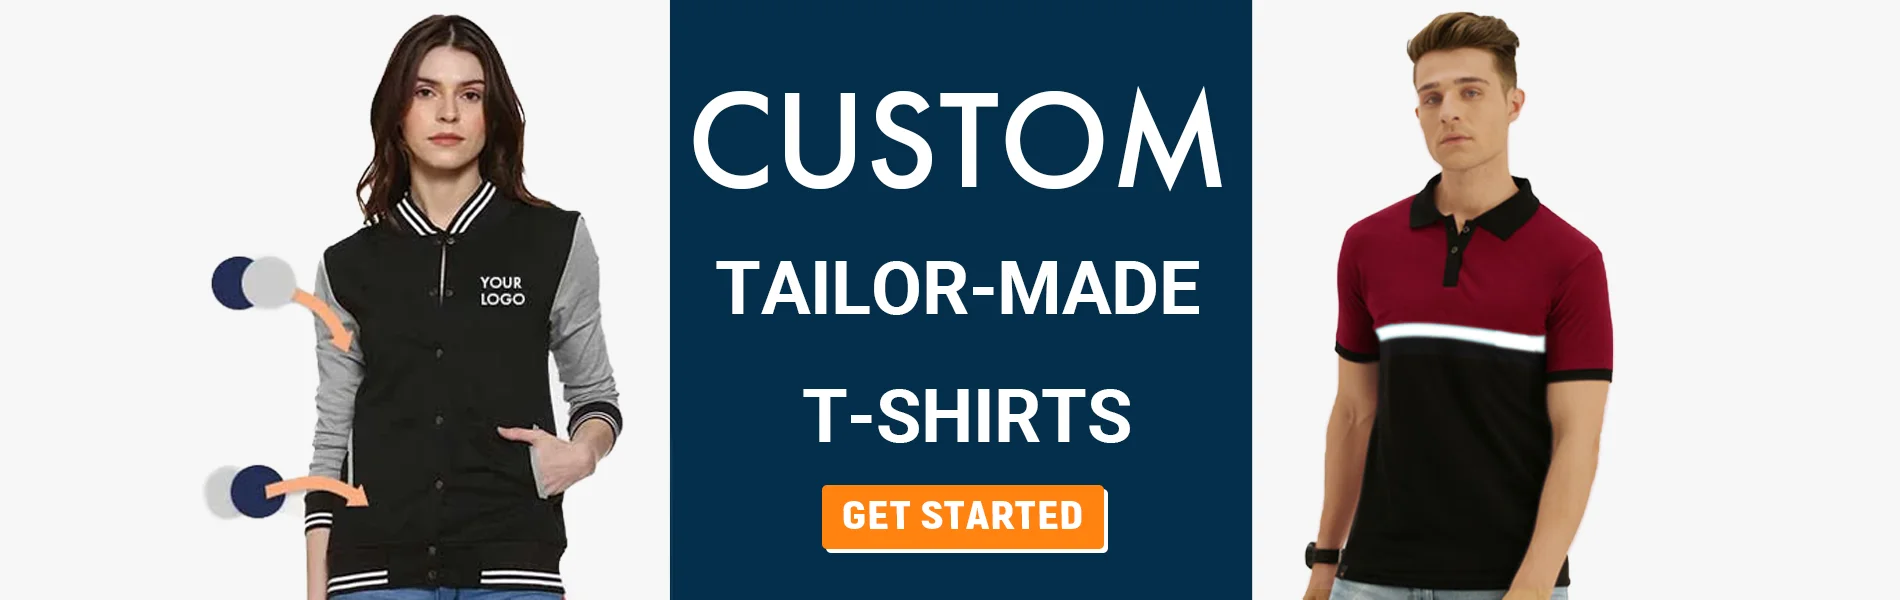 custom tailormade t-shirts trivandrum